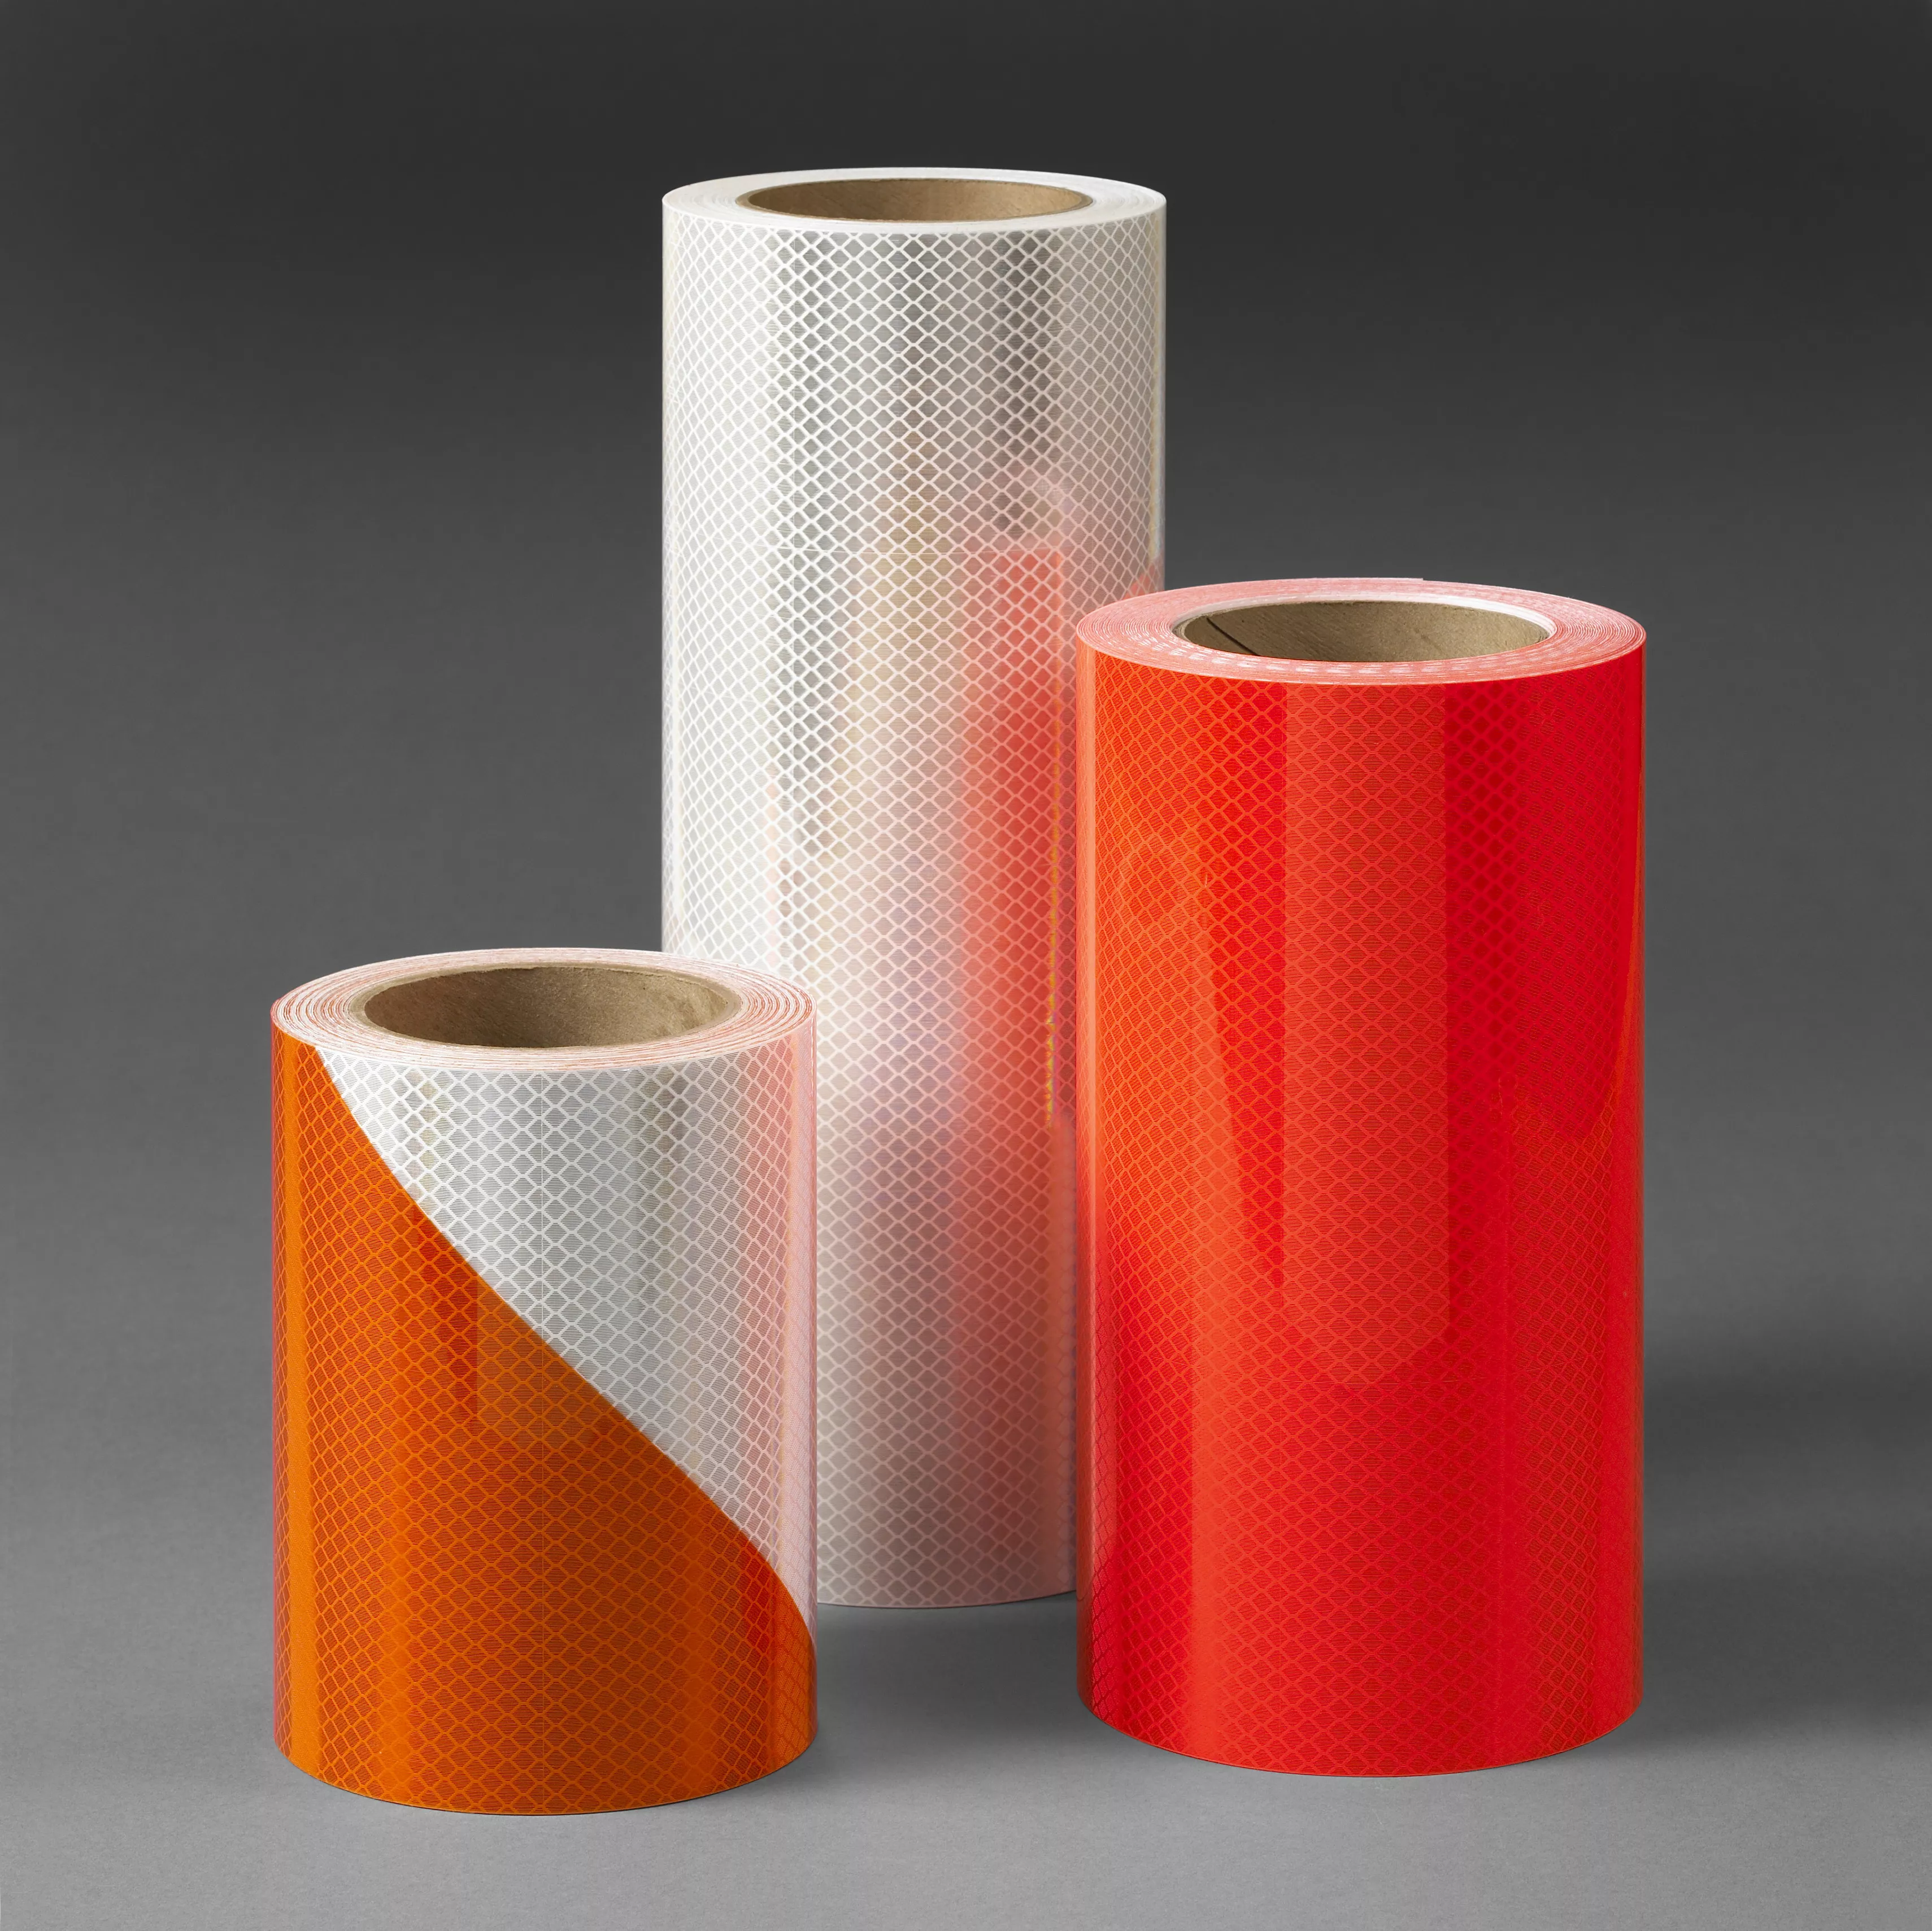 3M™ Diamond Grade™ DG³ Pre-Striped Barricade Sheeting Series 446R
Orange/White, 6 in right, 8 in x 50 yd